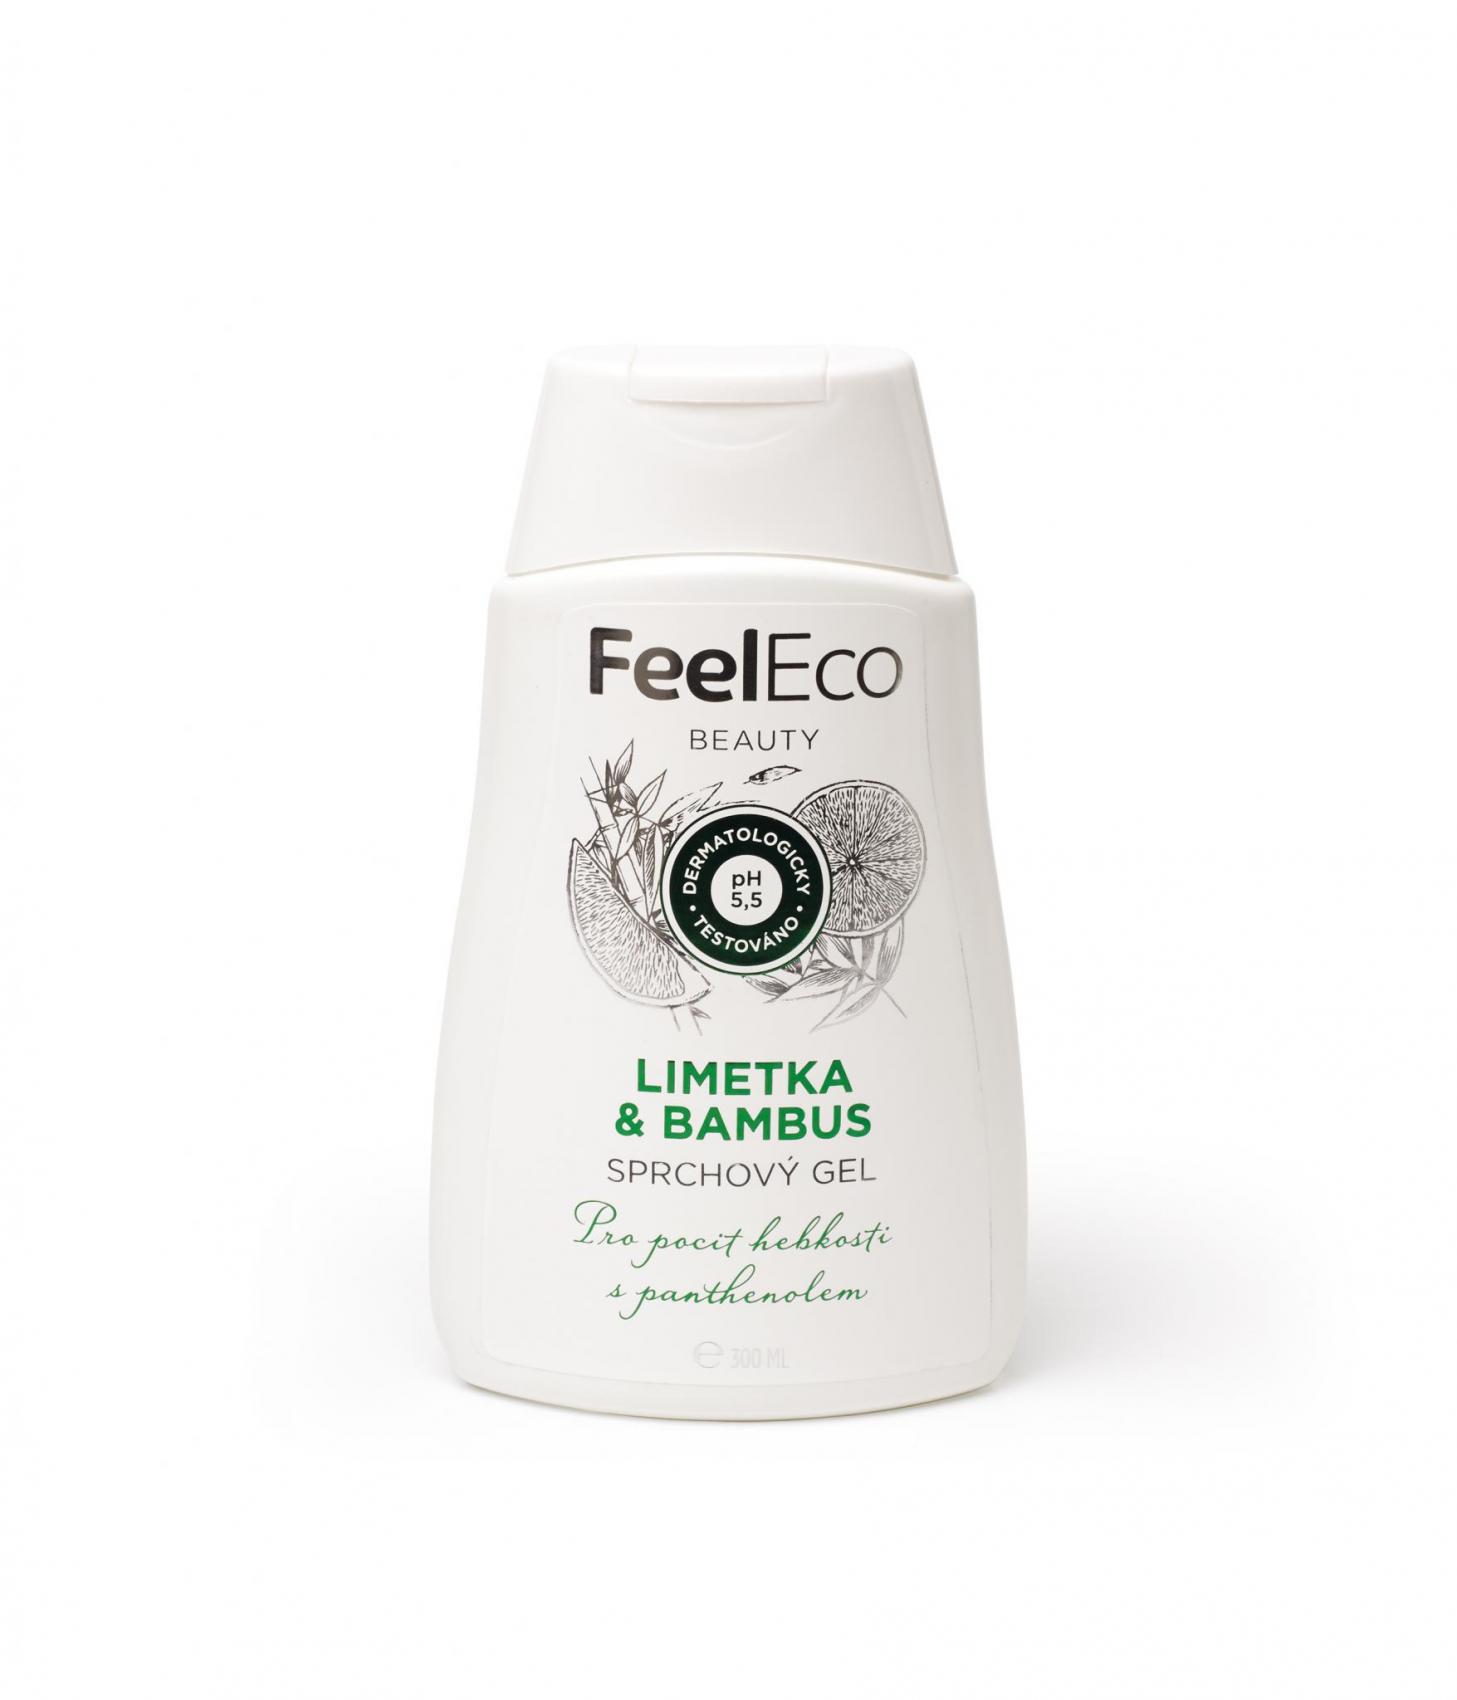 Feel Eco sprchový gel limetka & bambus 300ml